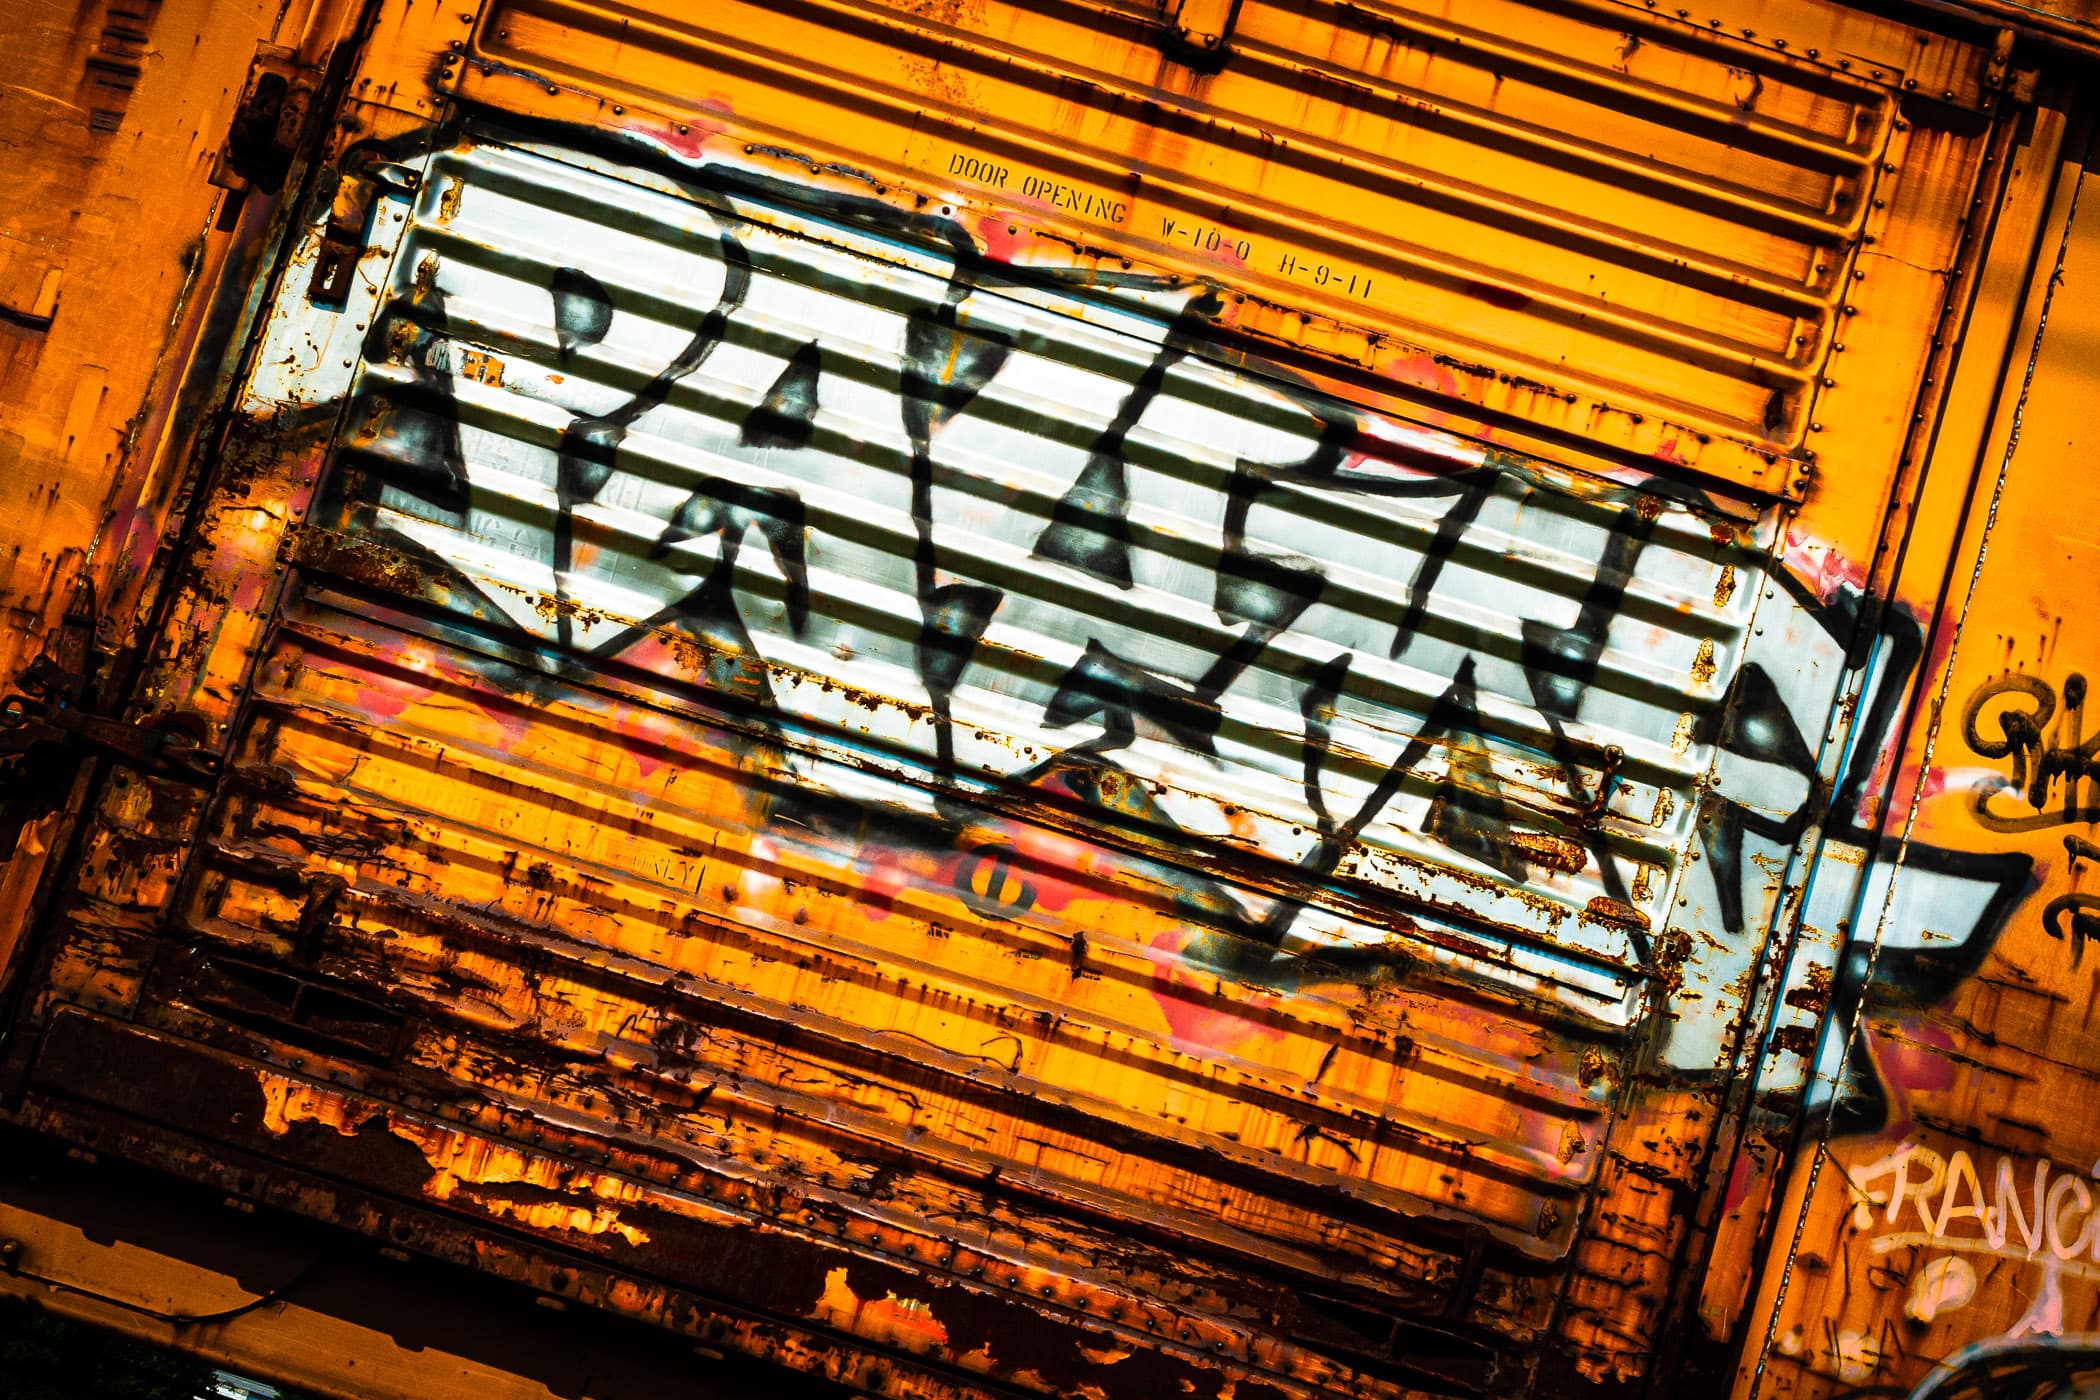 Graffiti on a railroad box car in Farmers Branch, Texas.